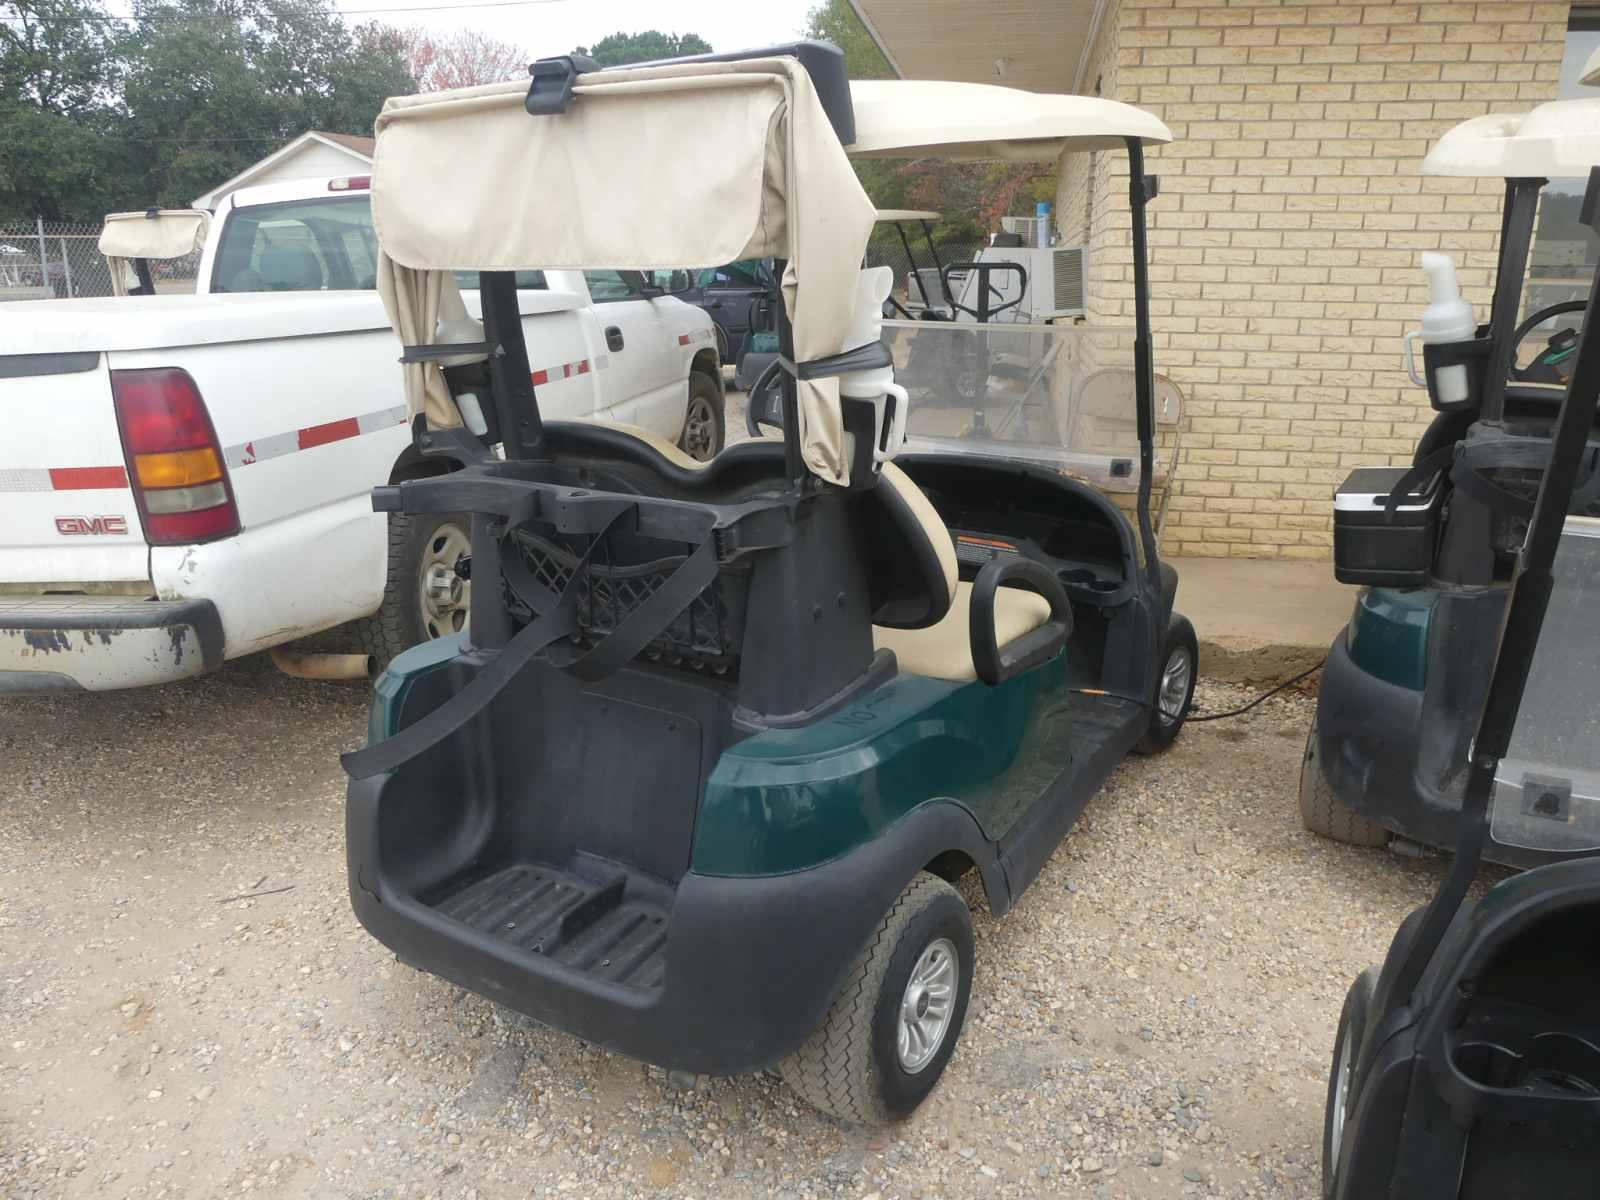 2019 Club Car Precedent Electric Golf Cart, s/n JE1945-024459 (No Title): w